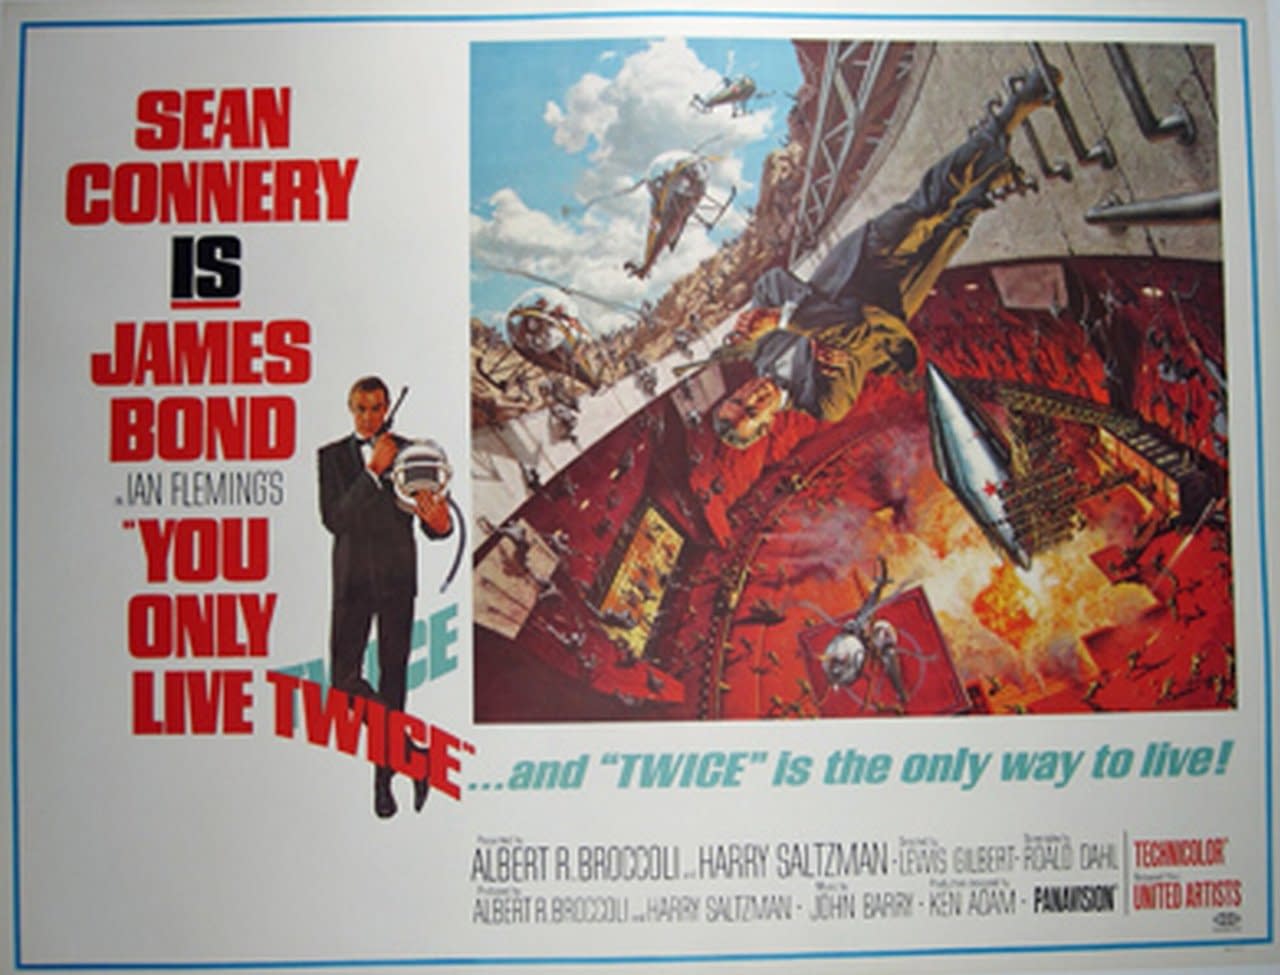 007 Bond Binge You Only Live Twice Aka Ninjas In Volcanoes